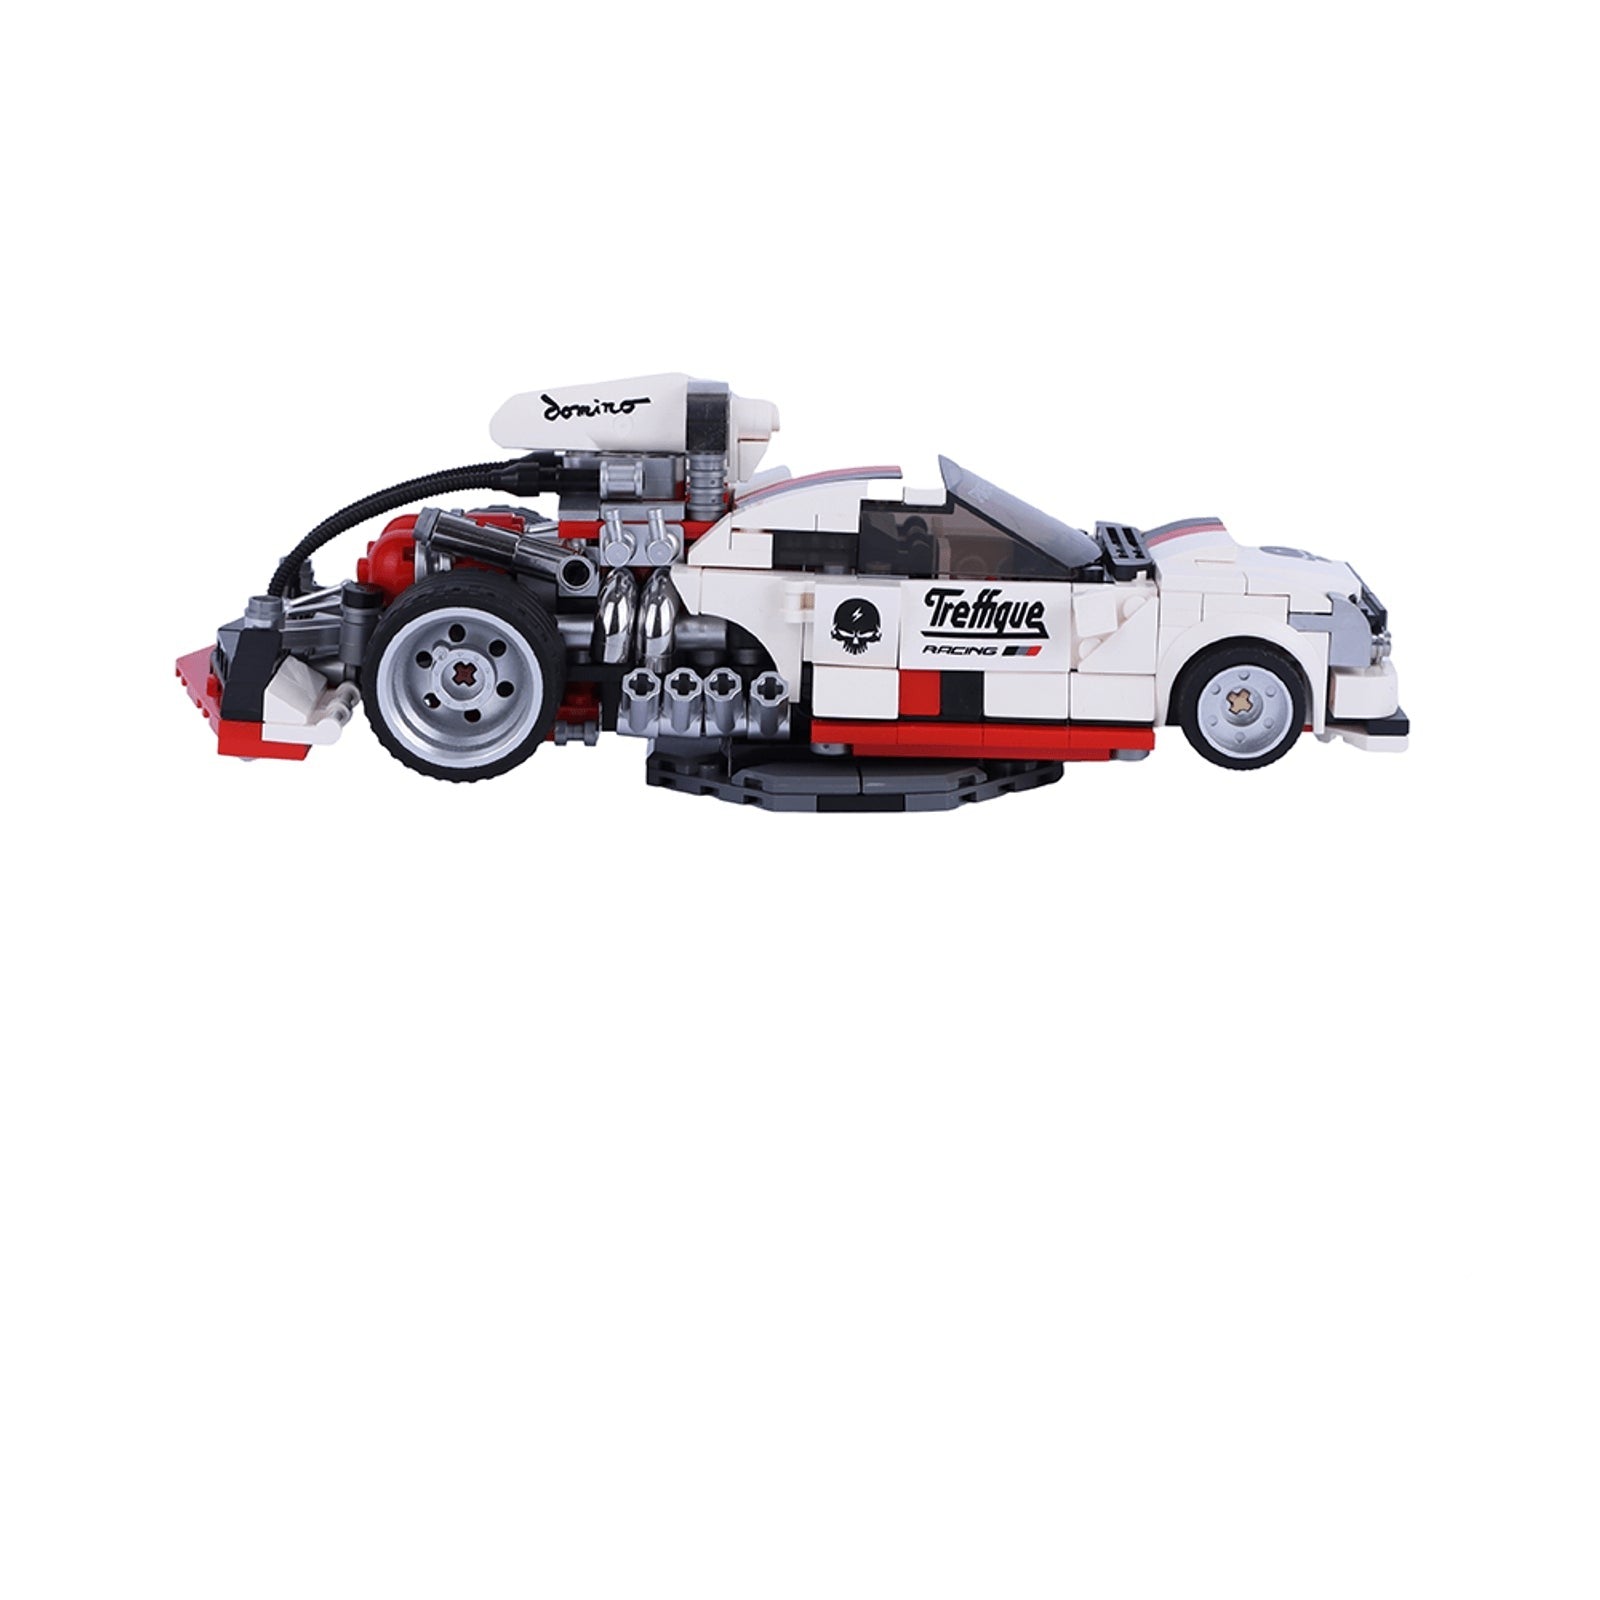 MINISO CAR MODEL SERIES HOT-SALES CAR BUILDING BLOCKS ( WHITE LIGHTNING, 436 PCS ) 2014267012100 TOY SERIES